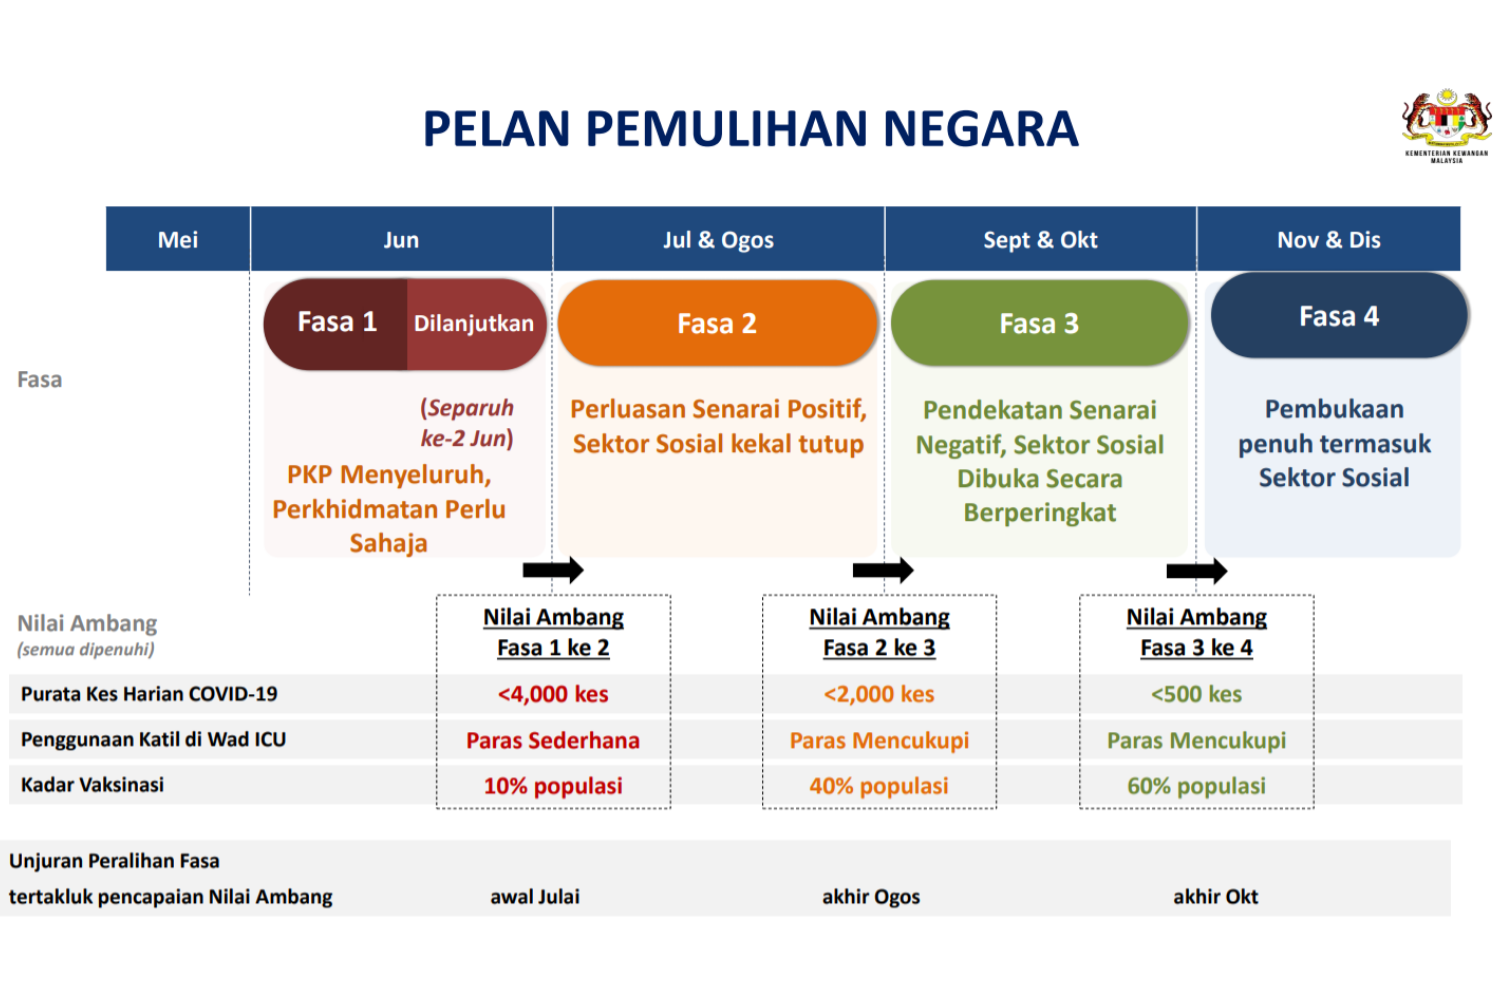 Phase 1 states malaysia